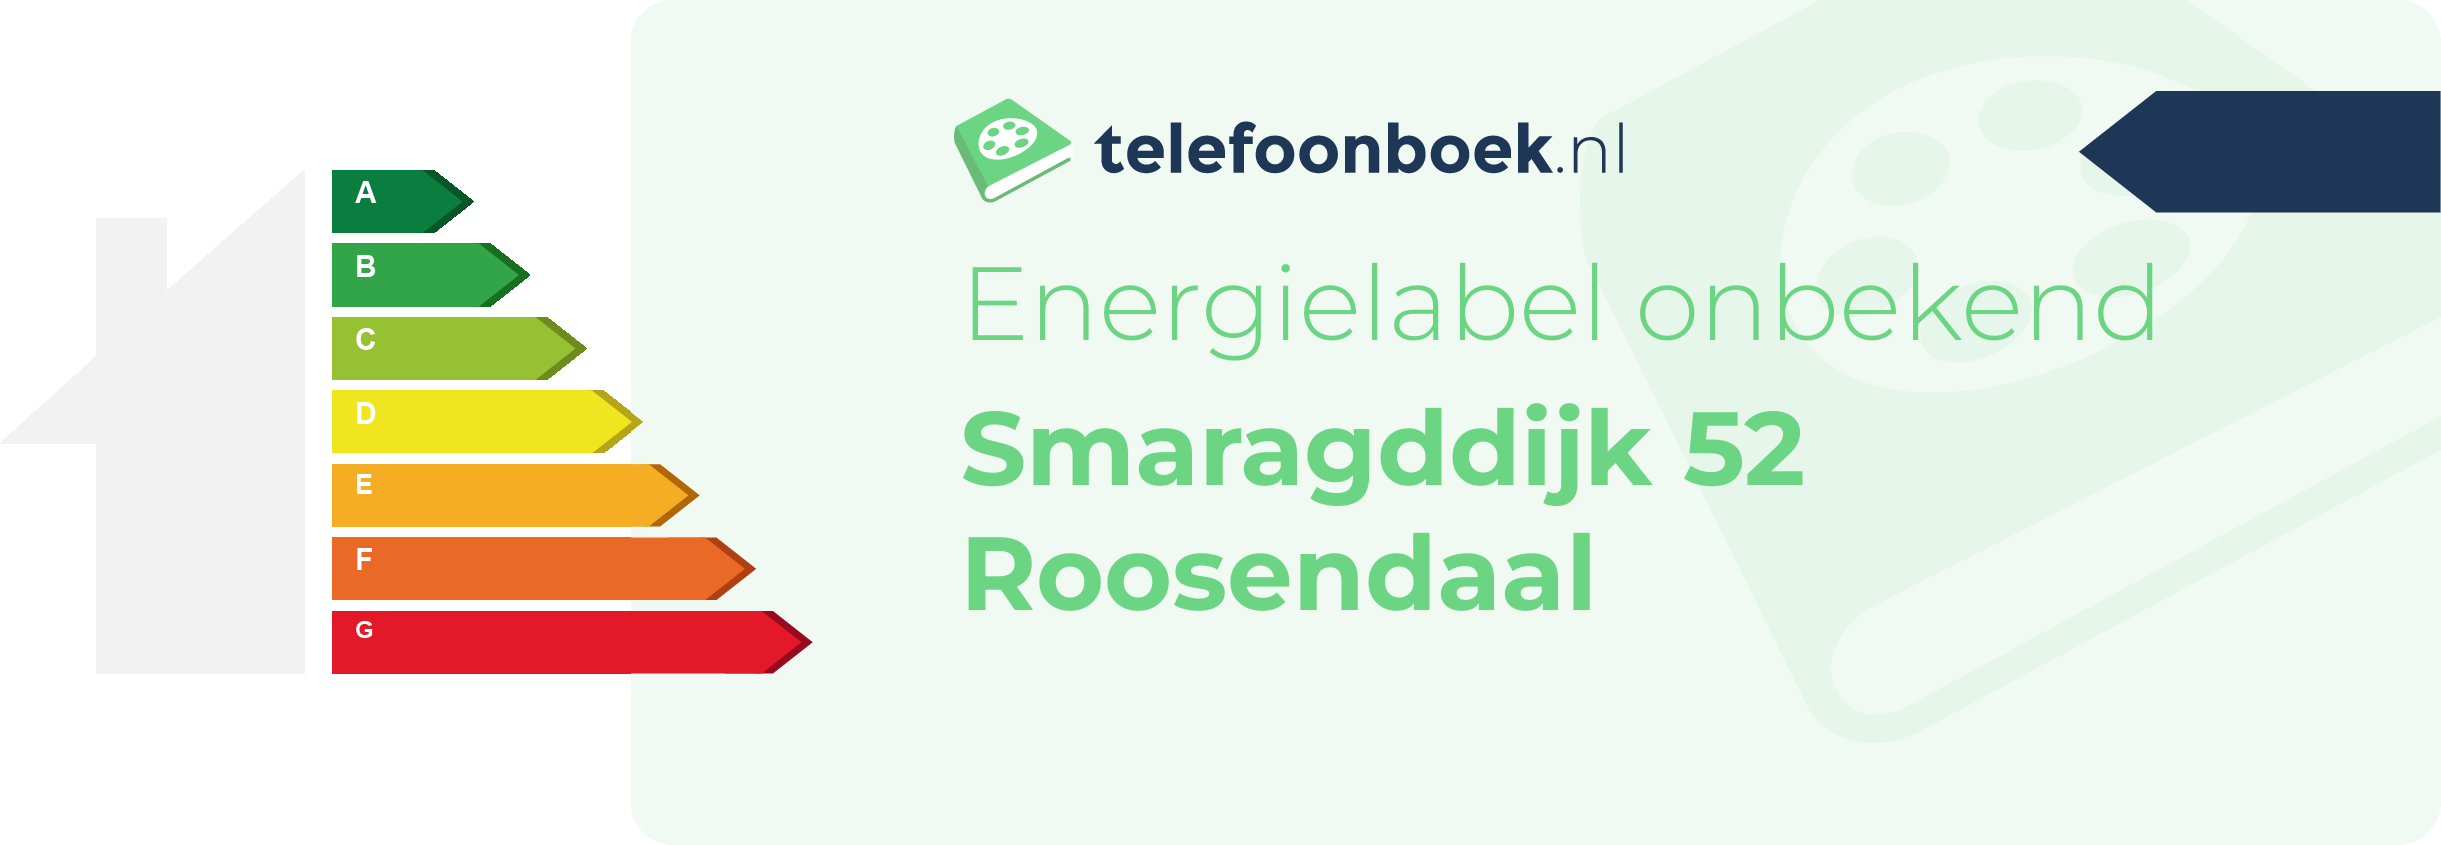 Energielabel Smaragddijk 52 Roosendaal